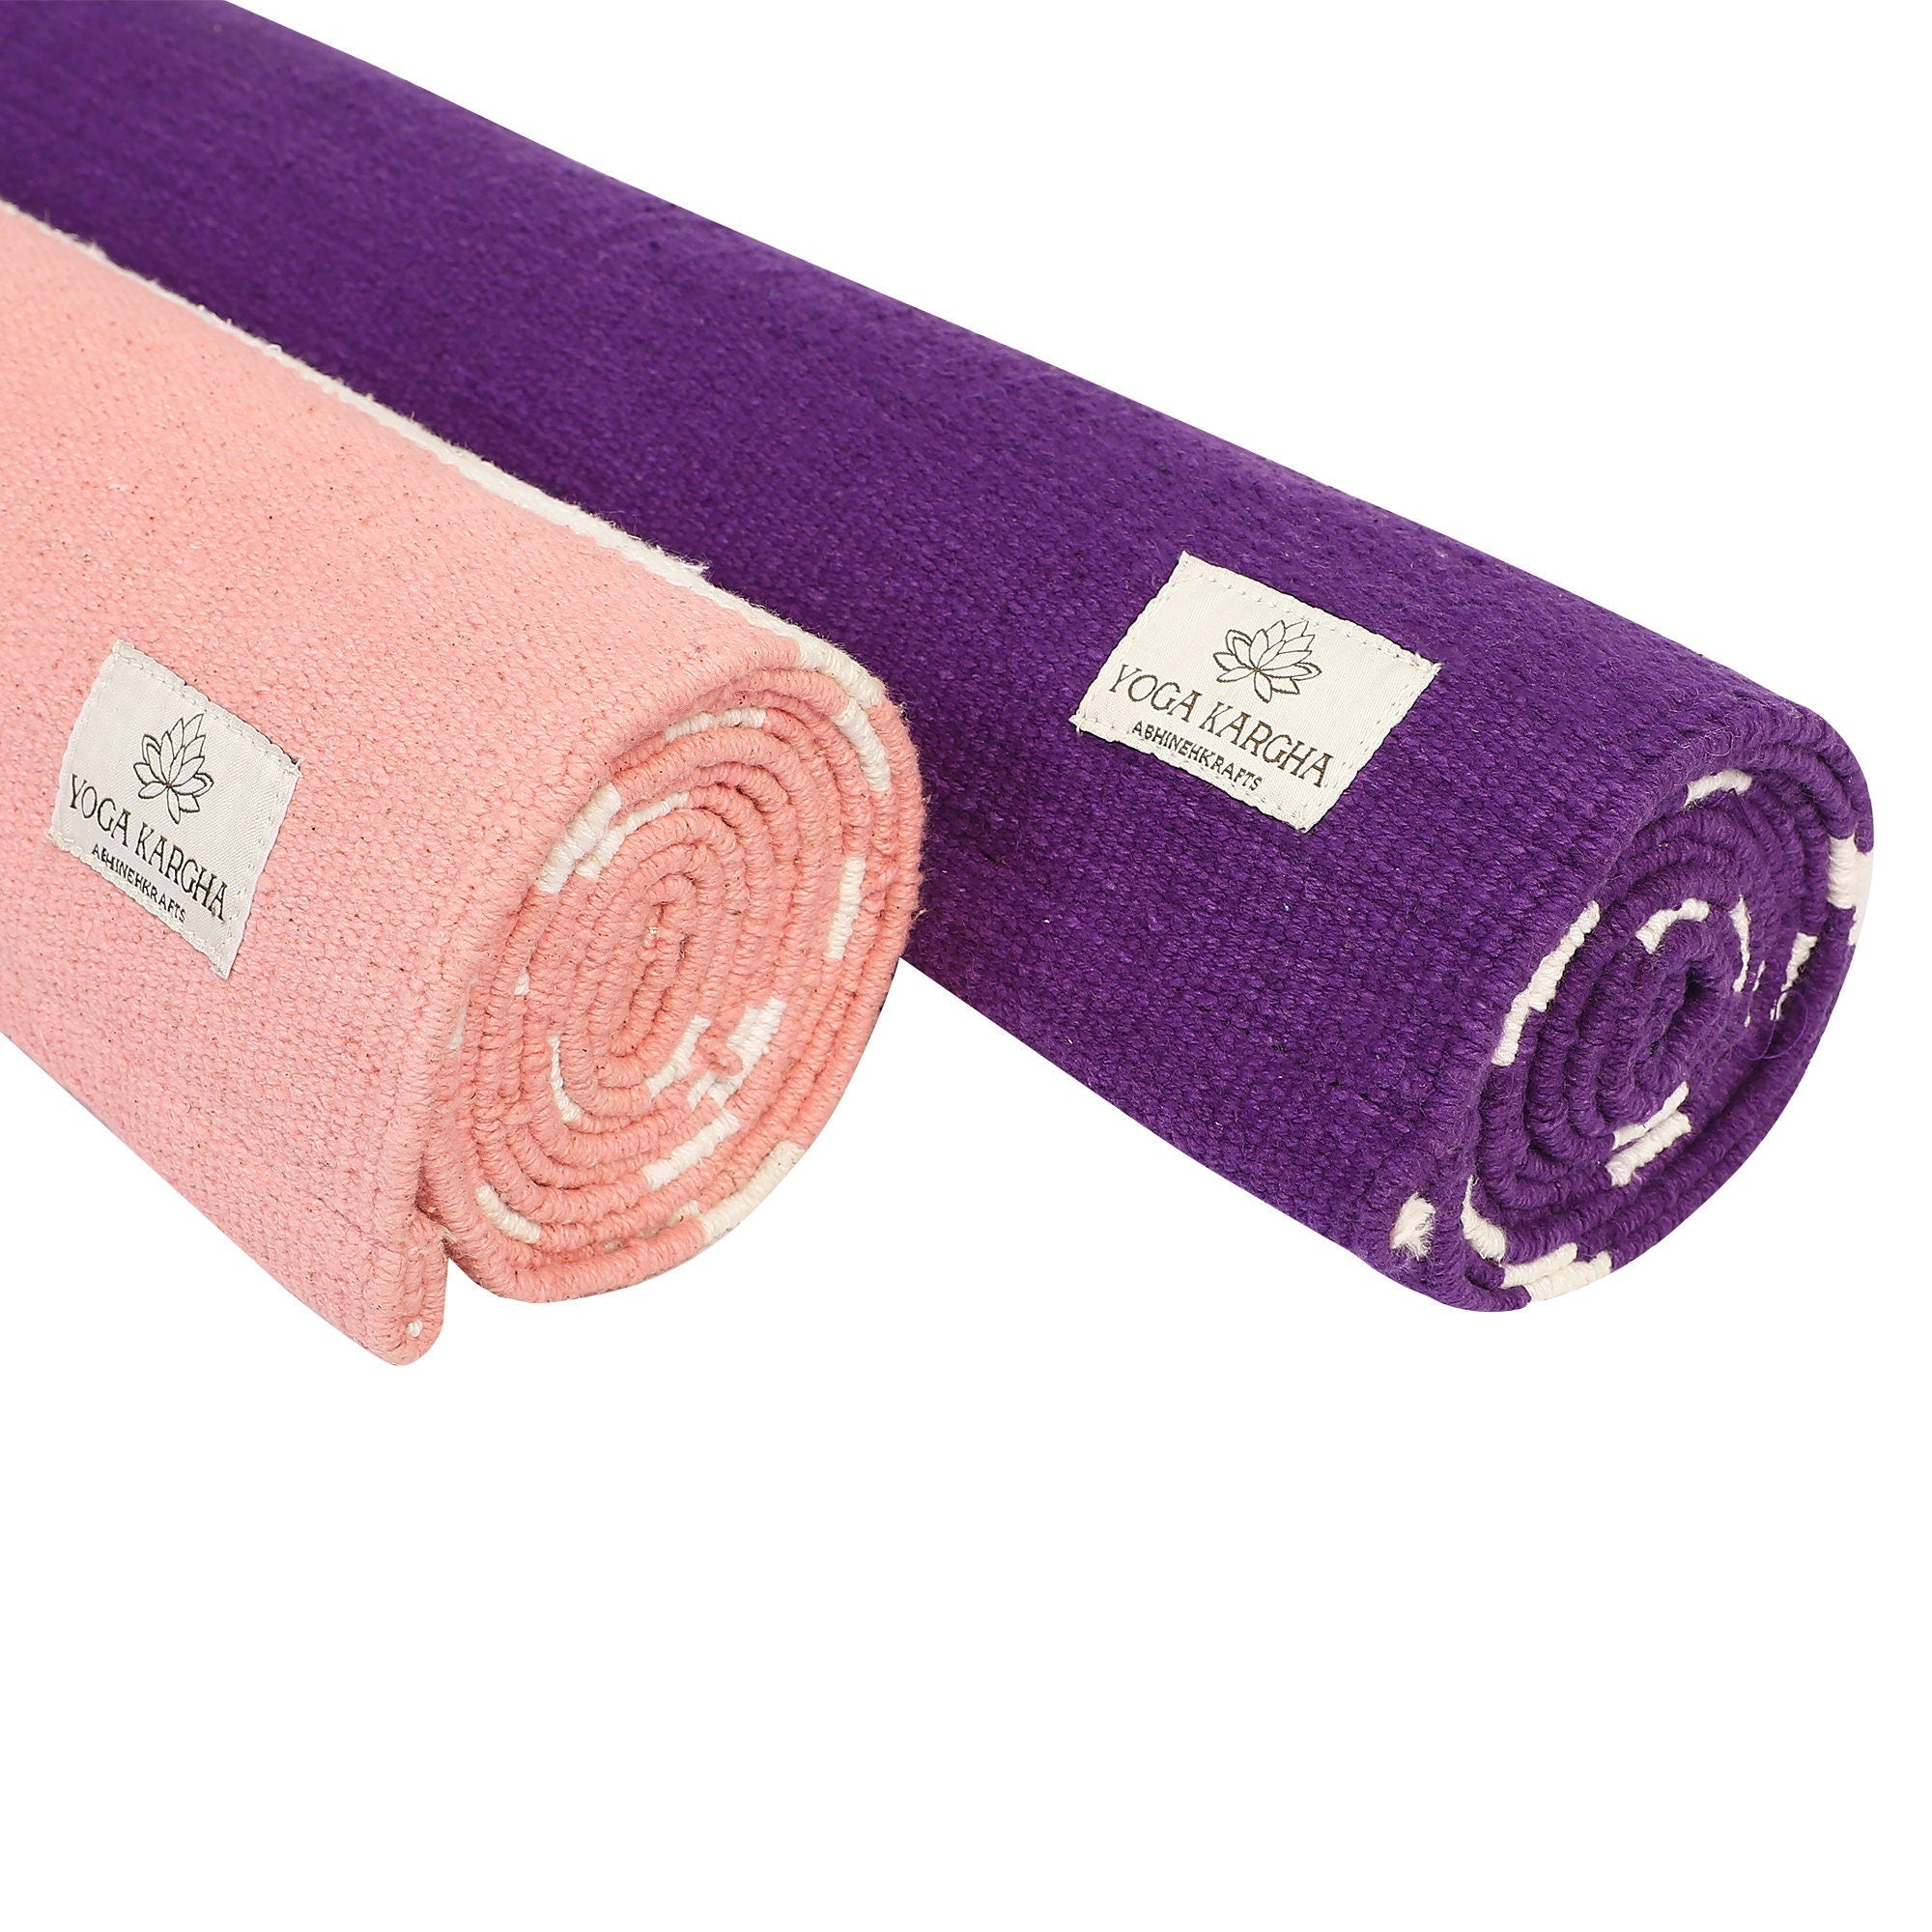 Handwoven Cotton Mat for Yoga, Meditation or Home Decor - Miami - YogaKargha